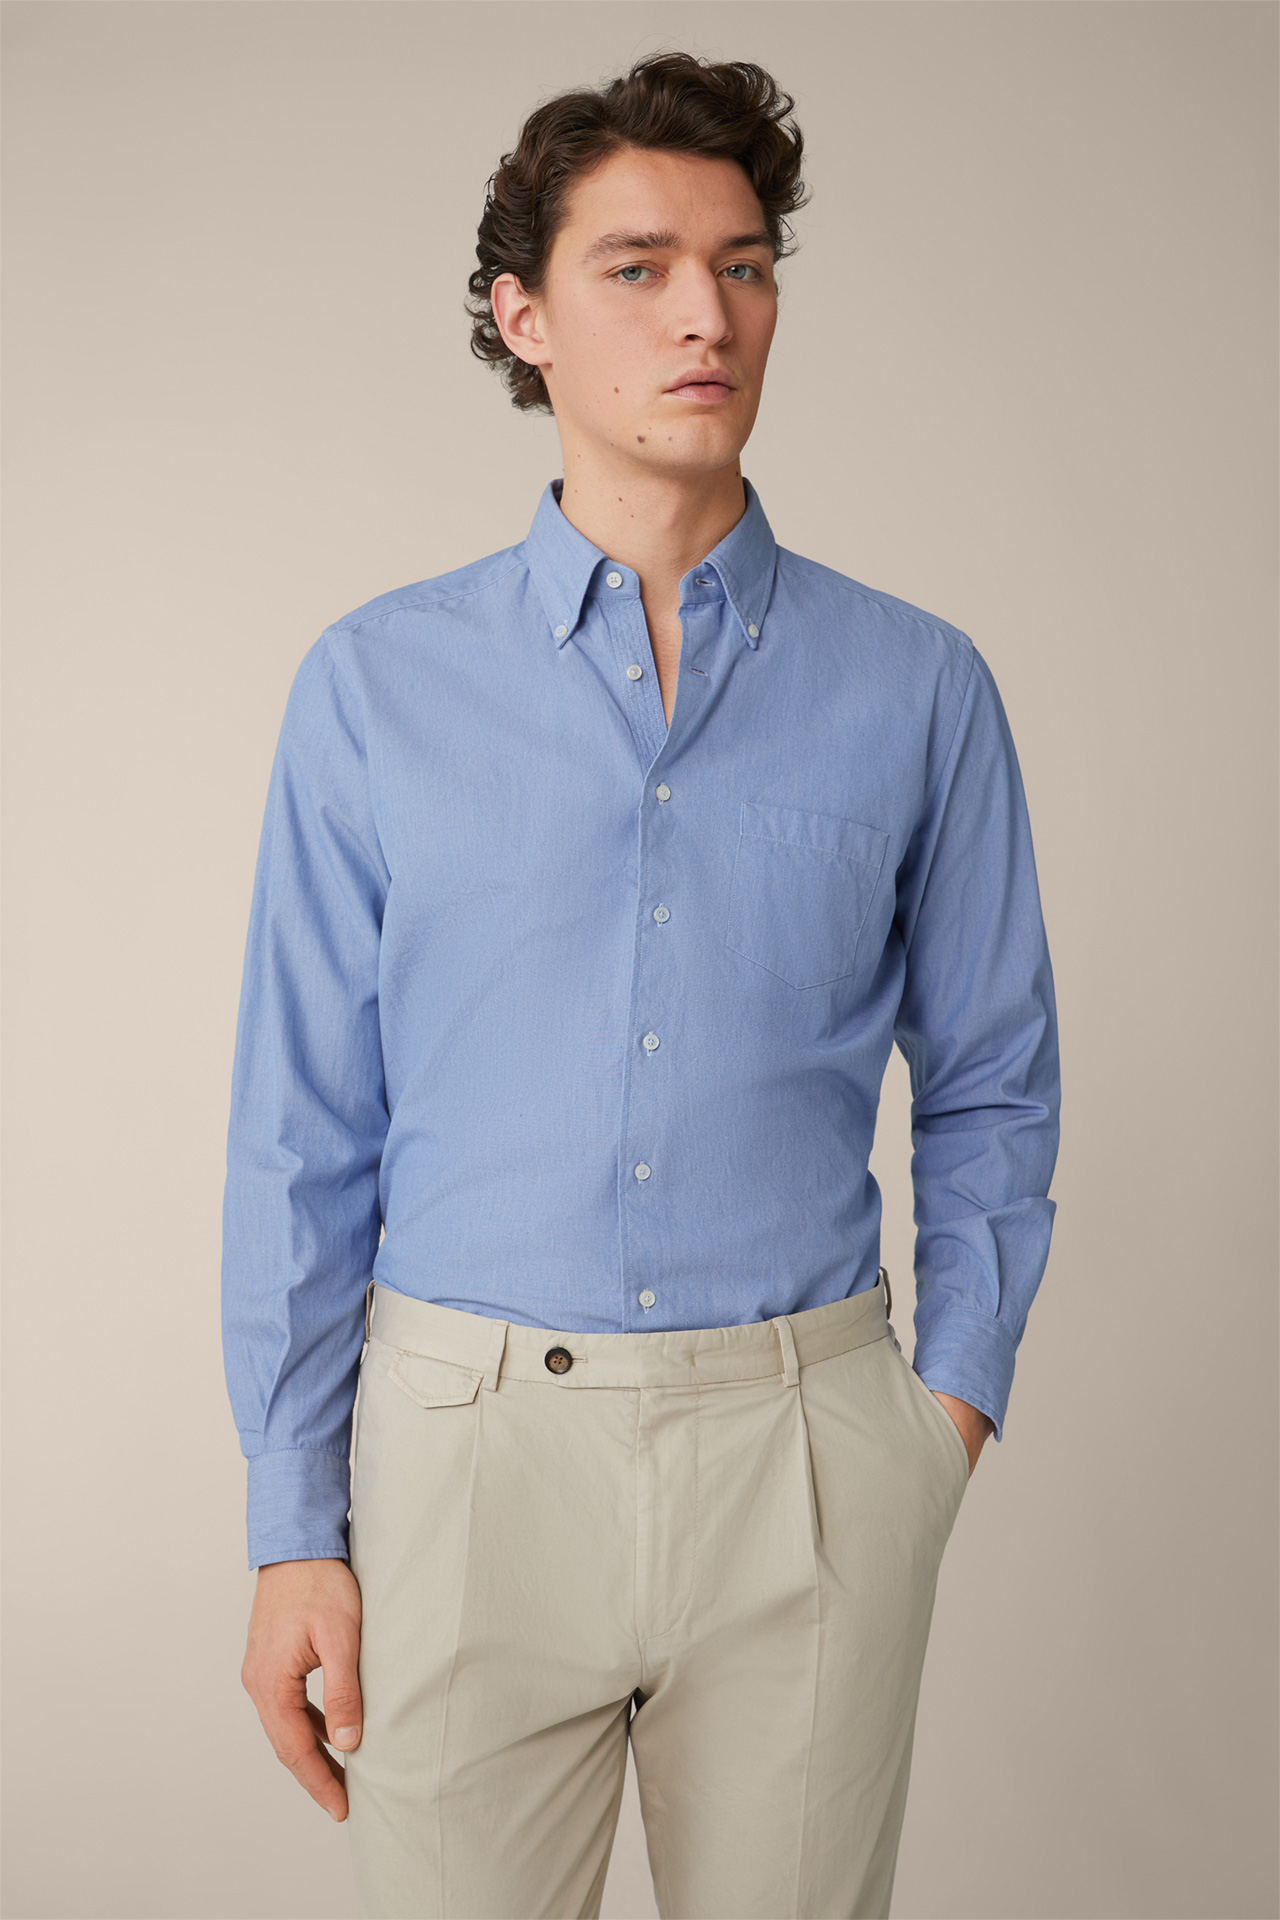 Loreggia Cotton Button Down Shirt in Blue